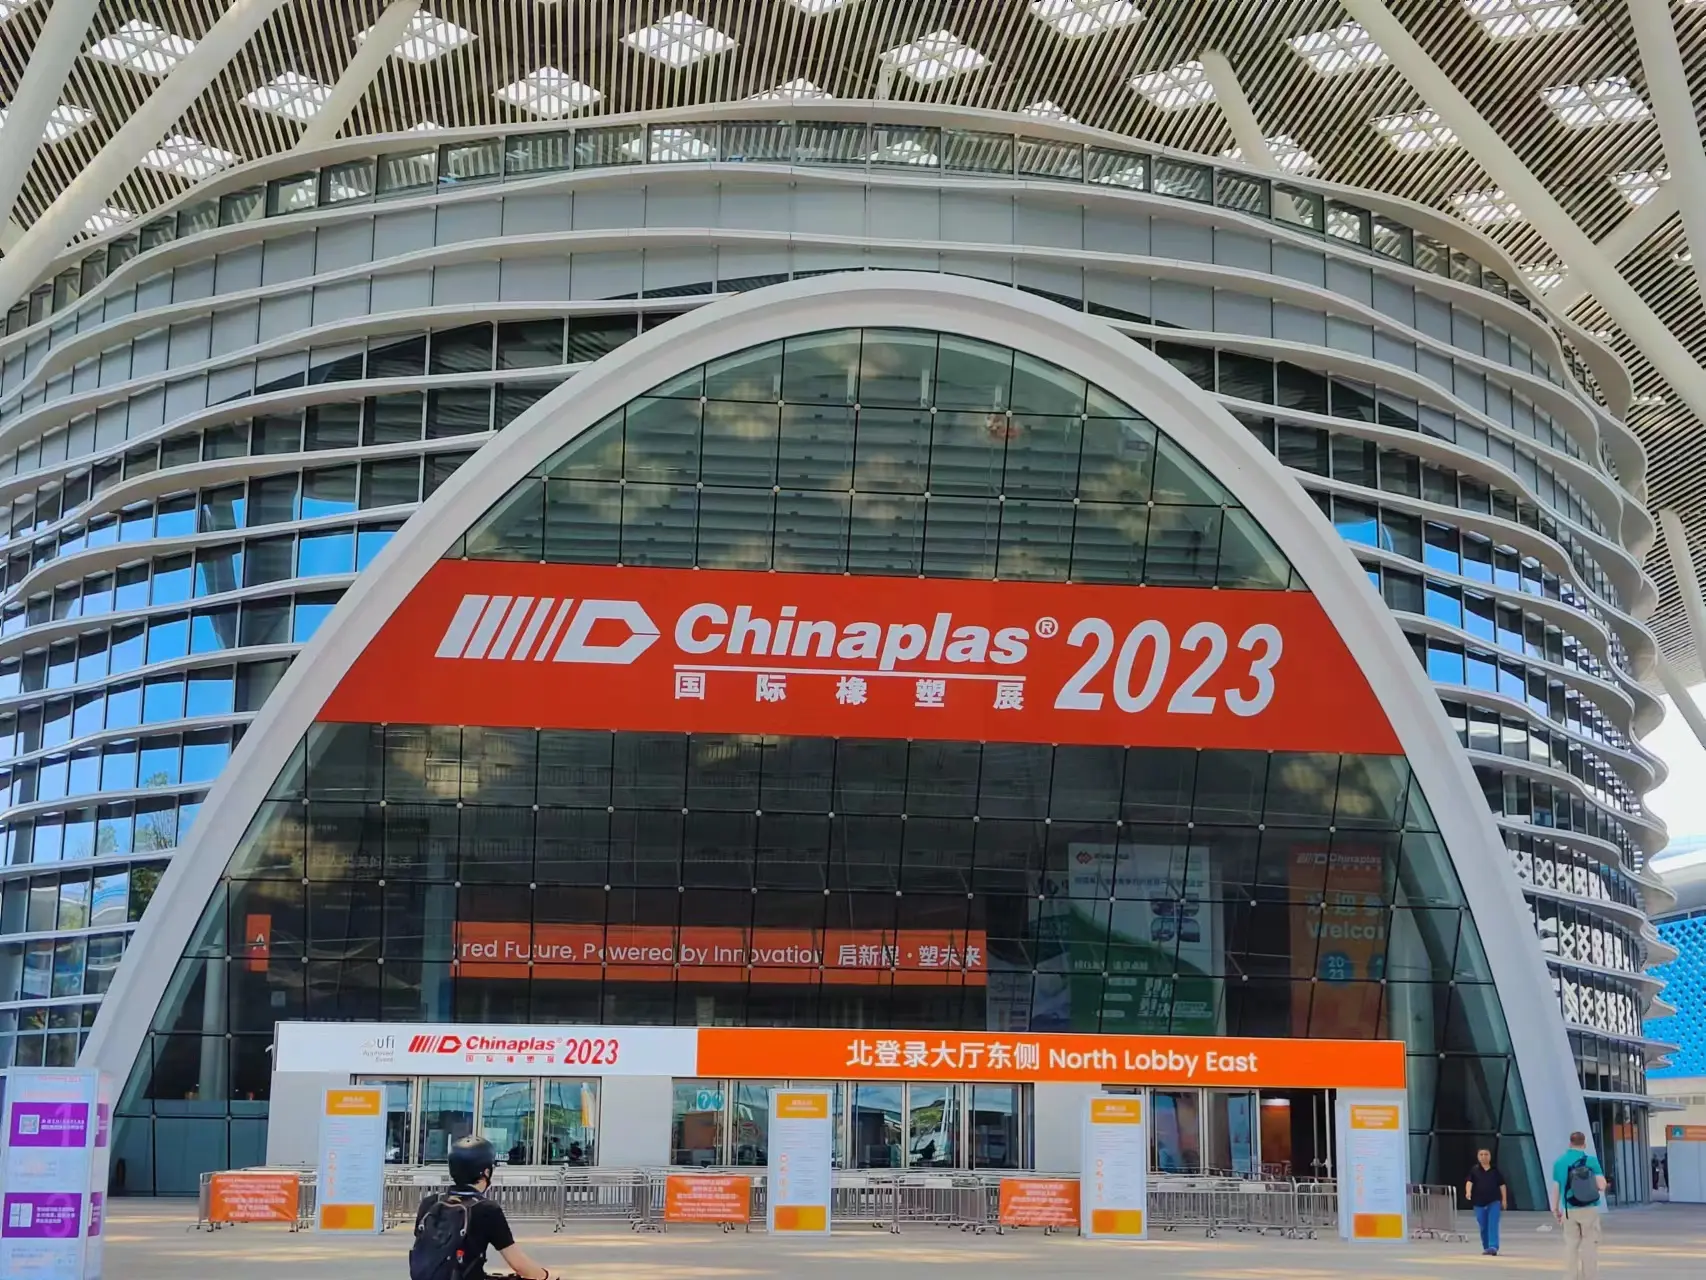 New Plastics Additives show on 2023 Chinaplas Exhibition